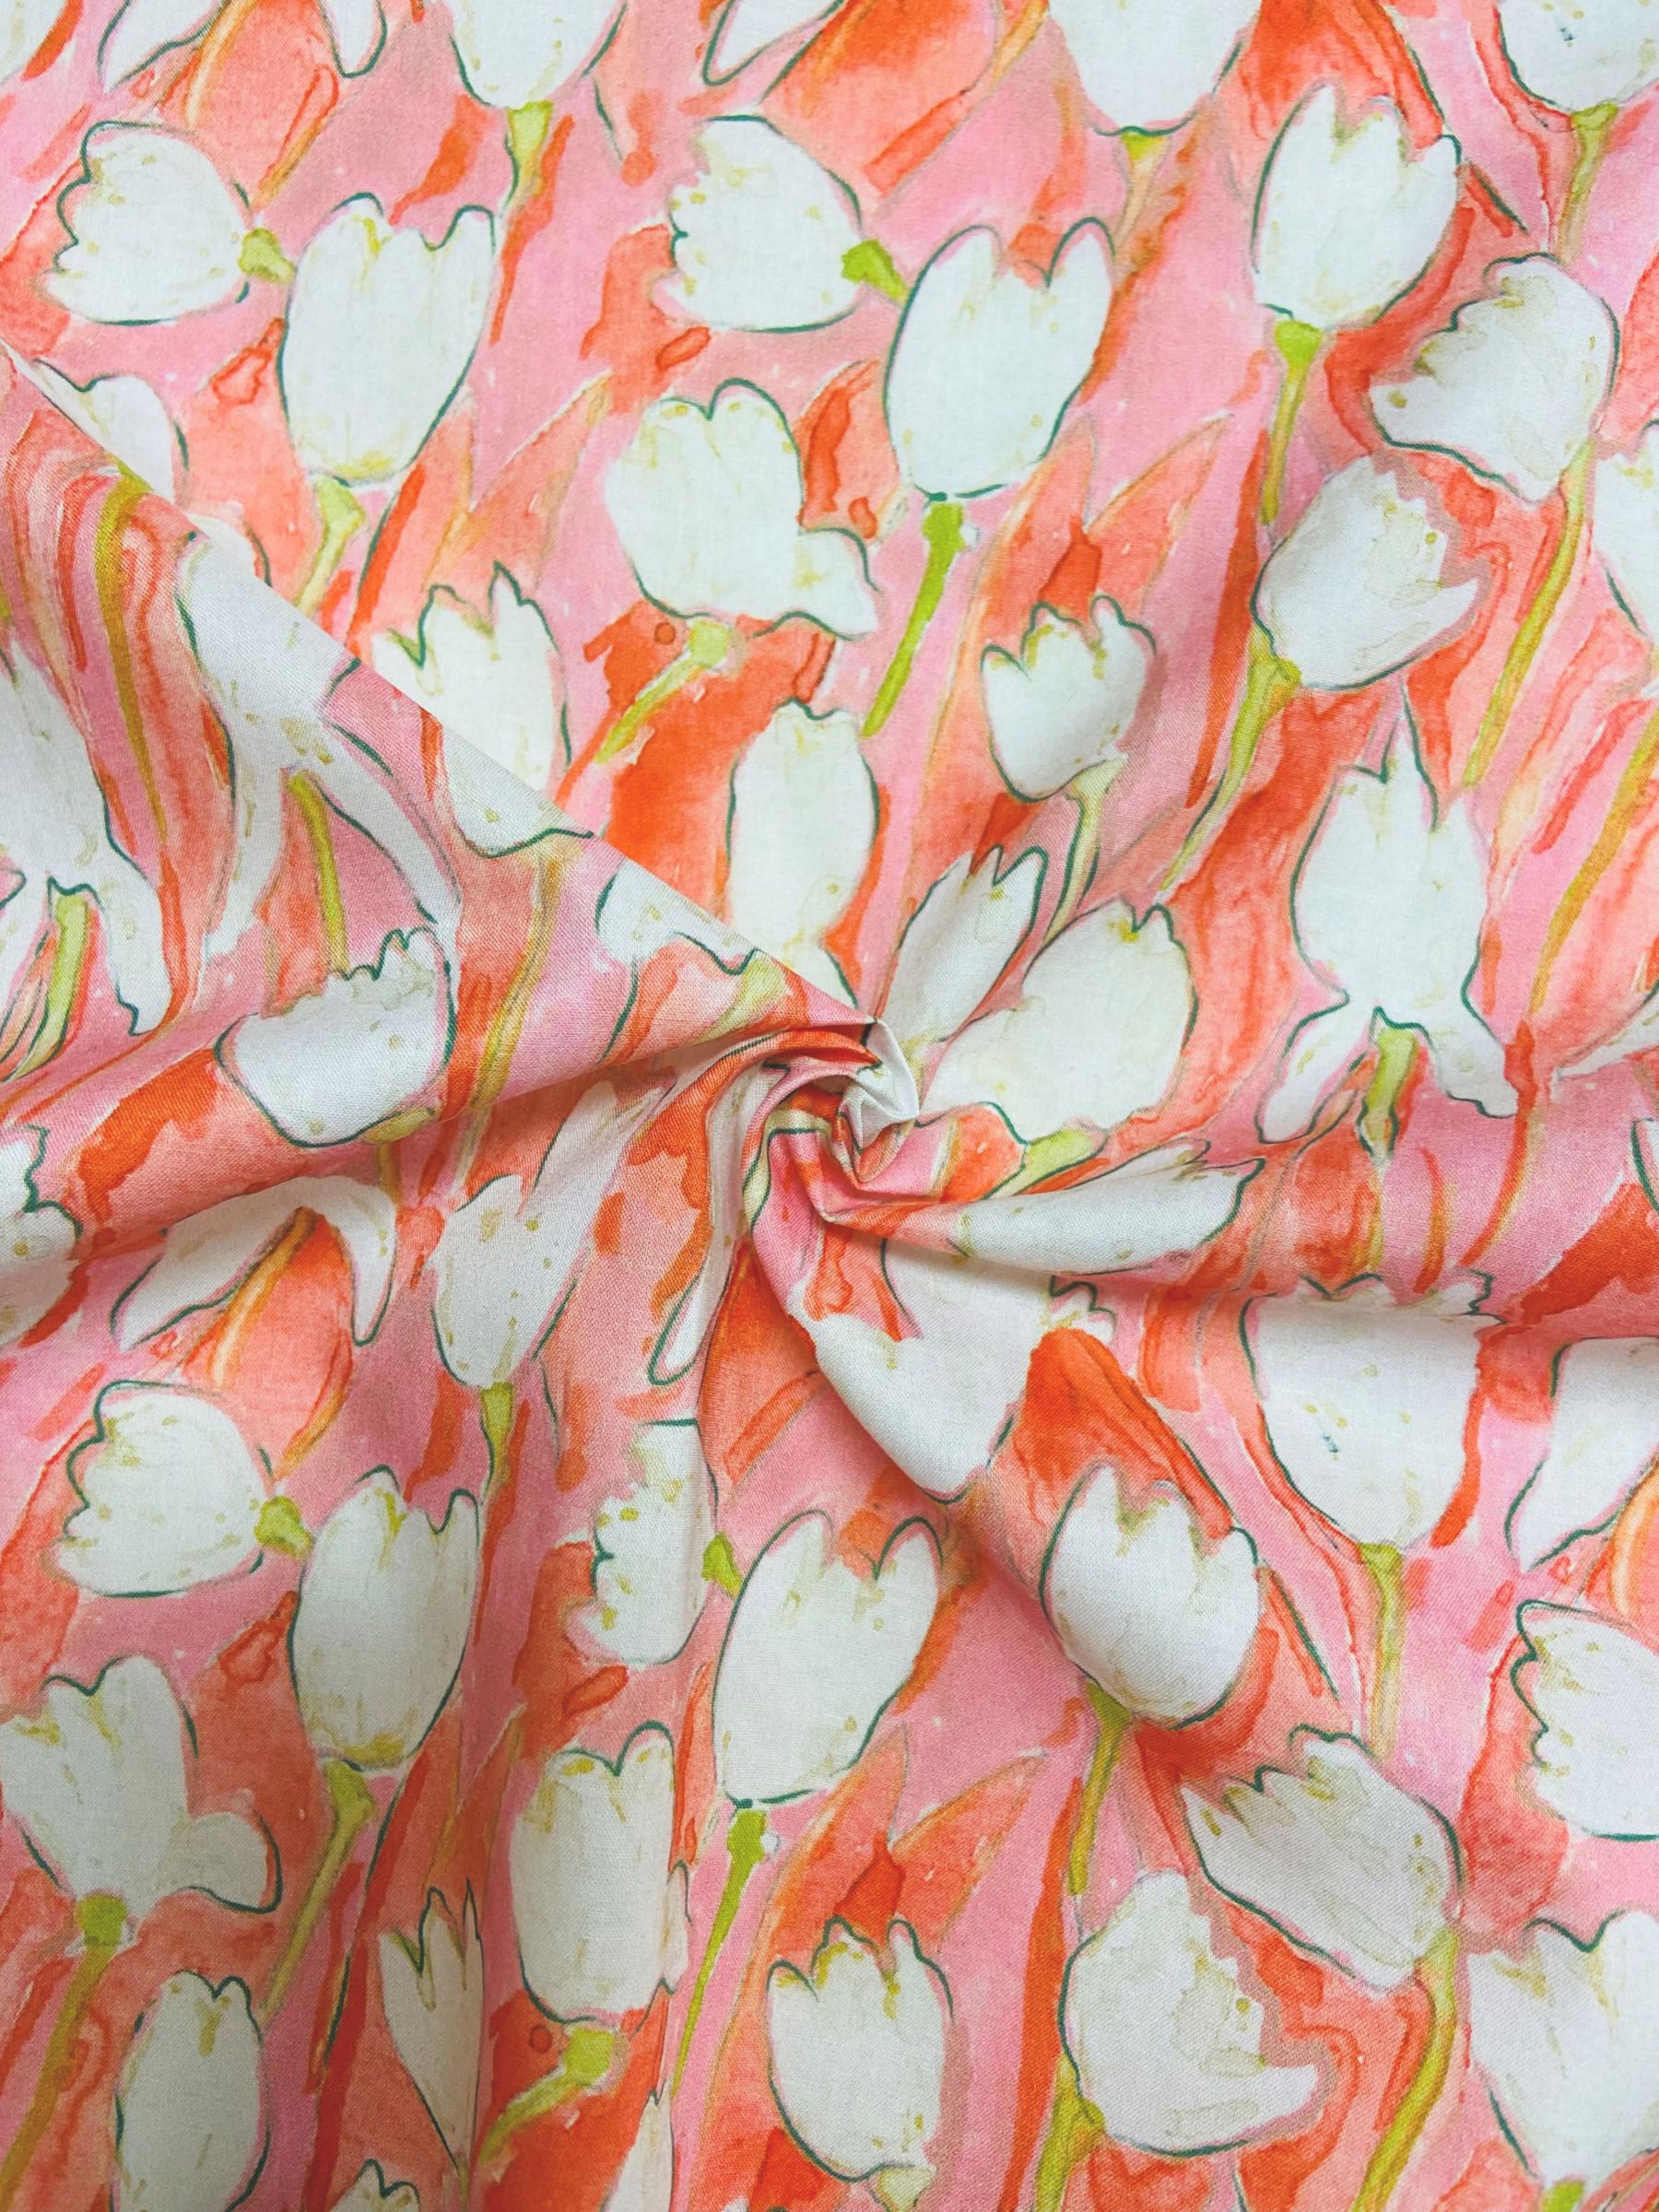 Viscount Textiles Watercolour Tulips Cotton Lawn Fabric, Orange